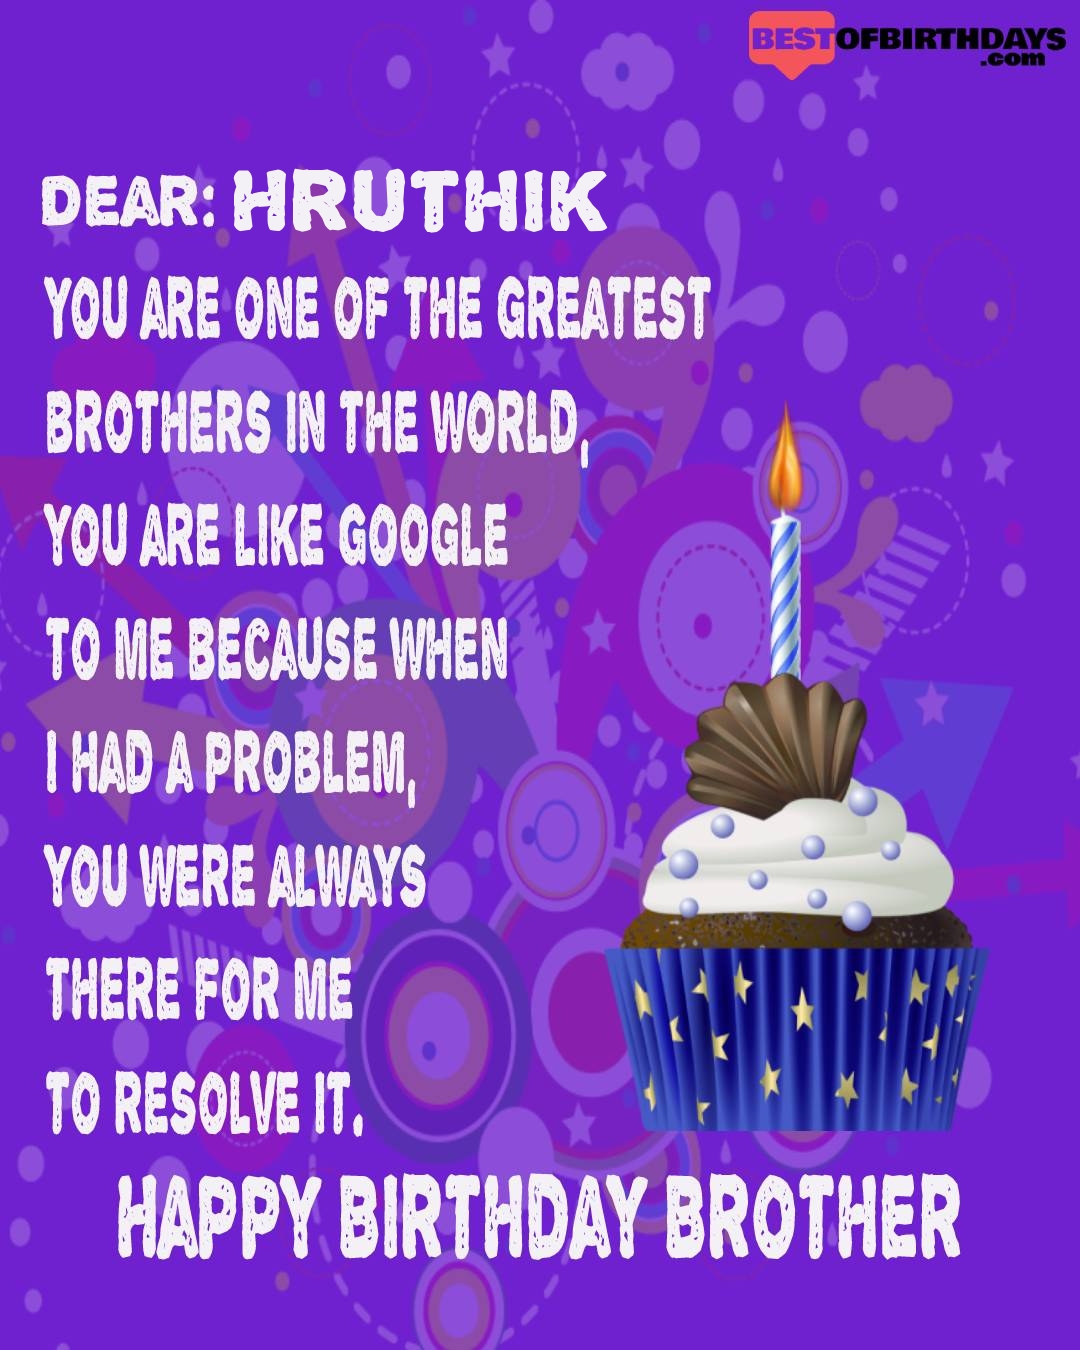 Happy birthday hruthik bhai brother bro